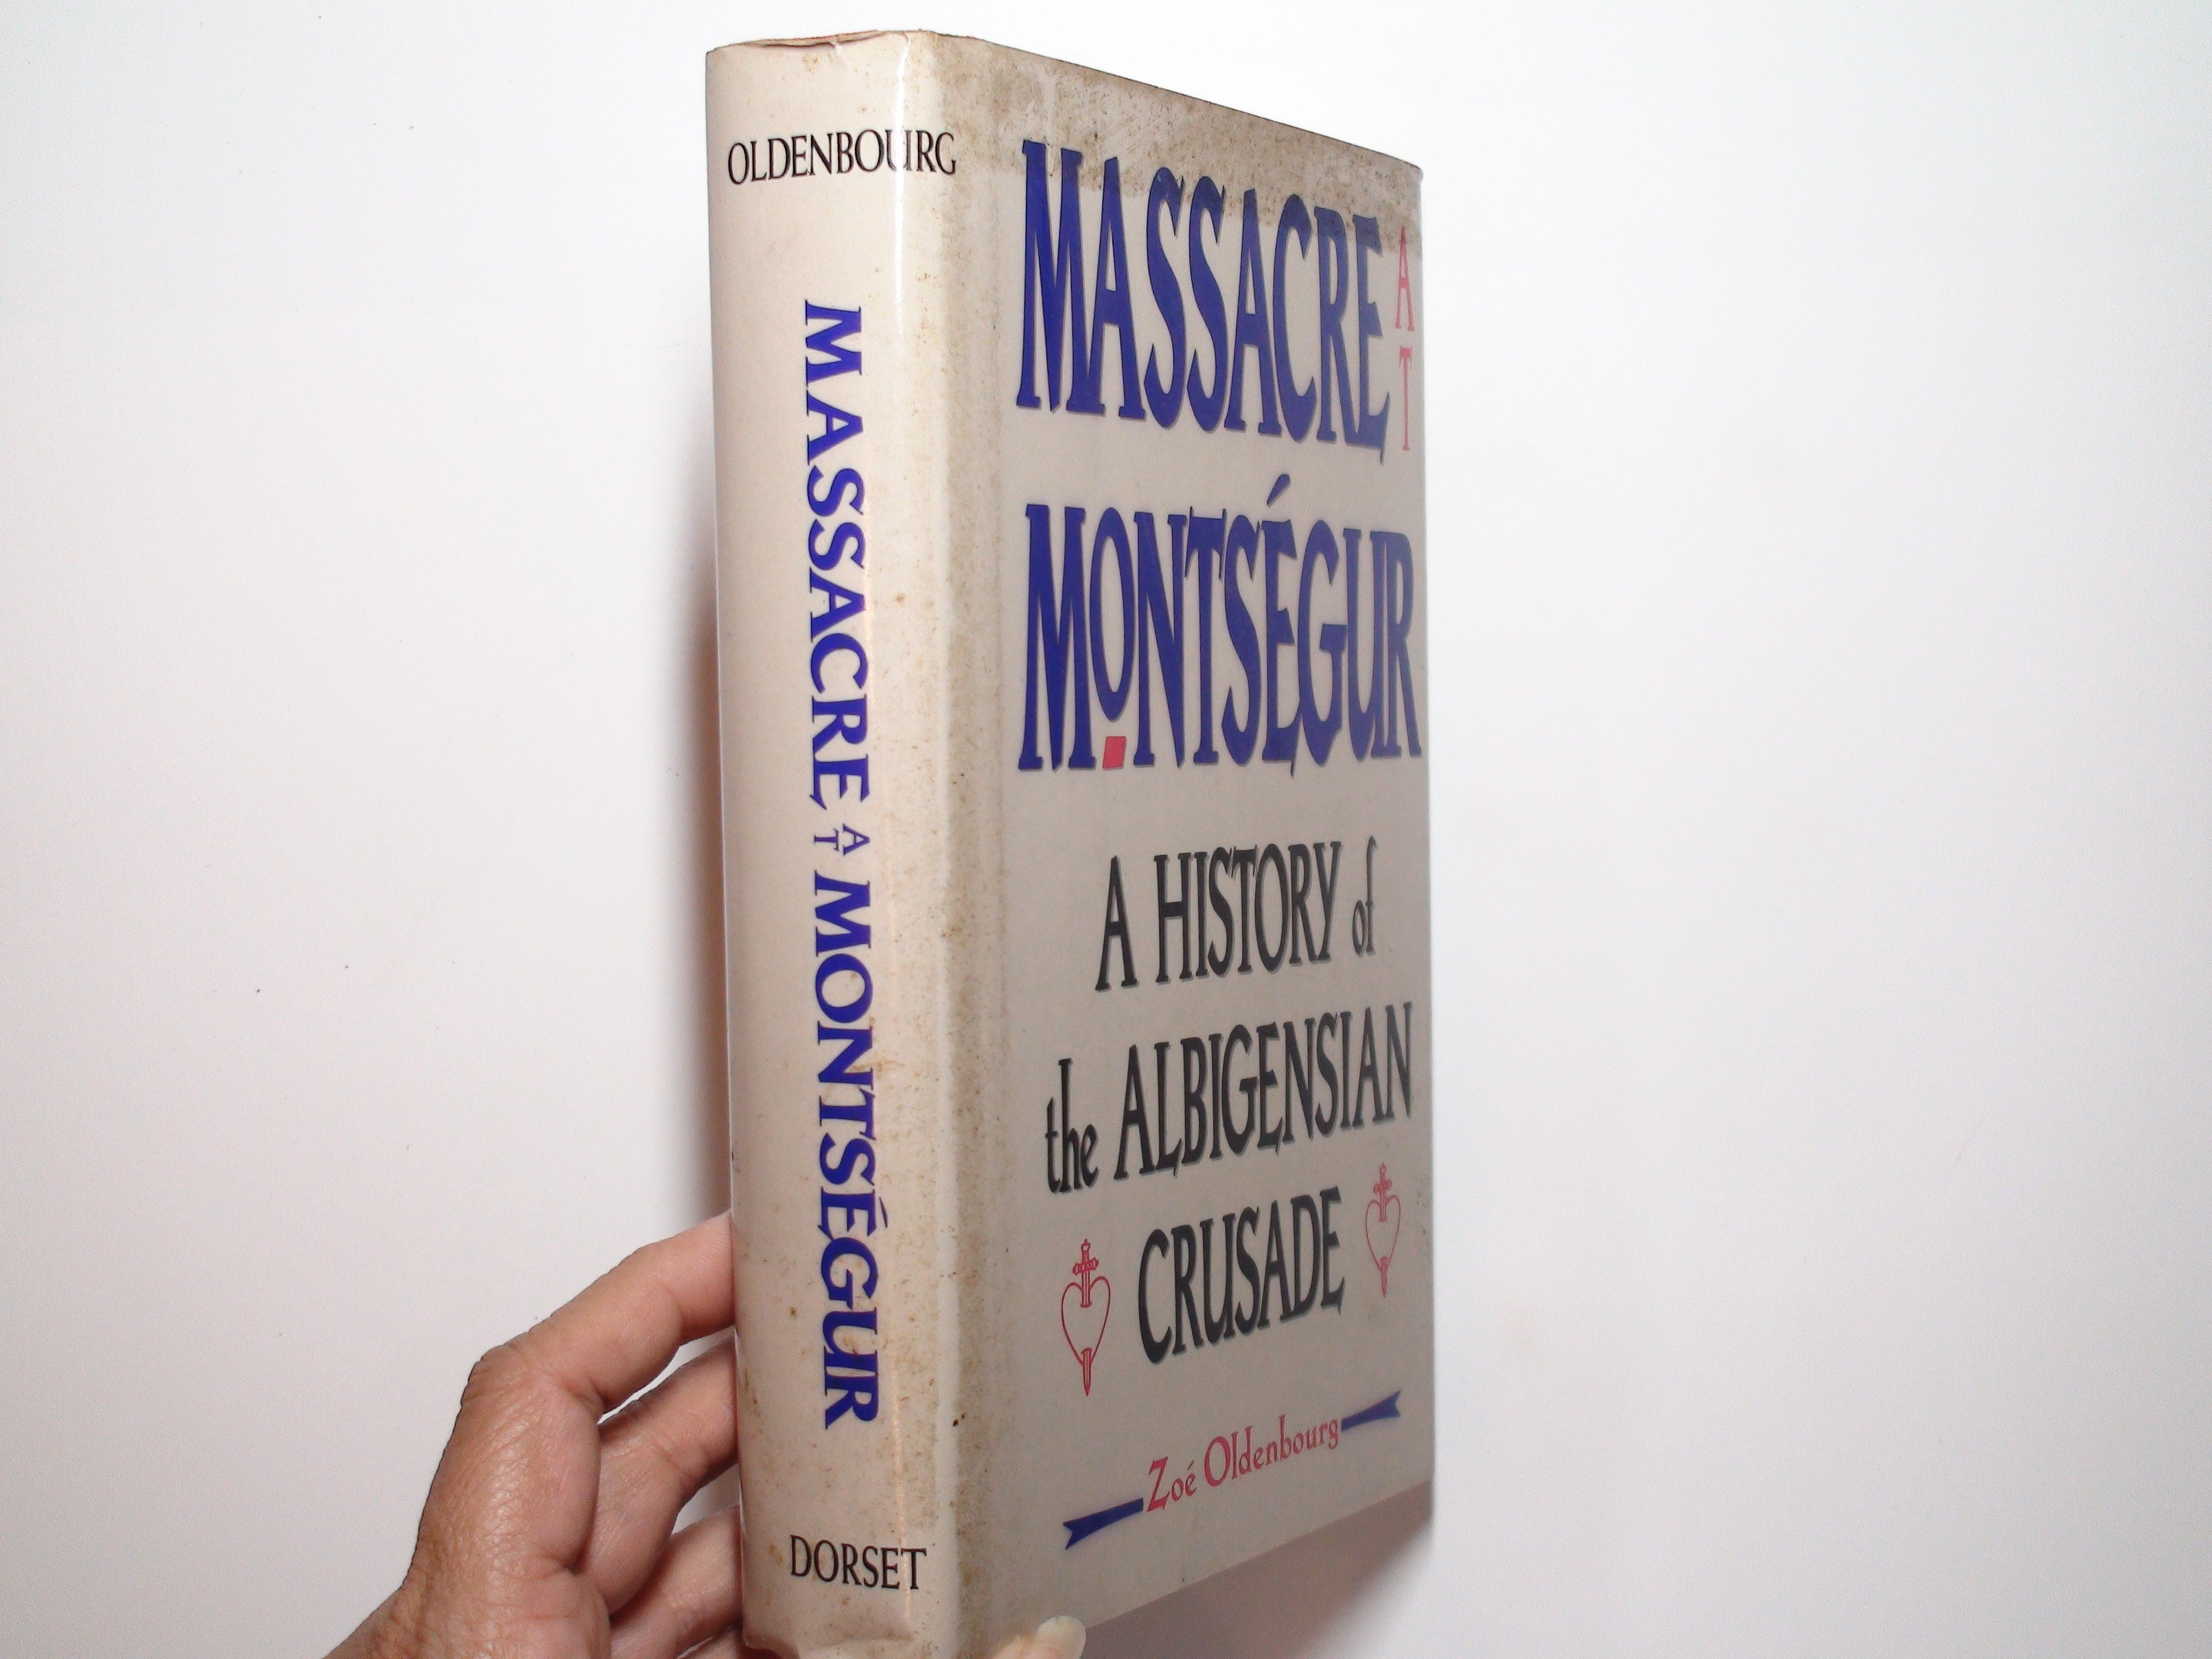 Massacre at Montsegur, History of the Albigensian Crusade, Zoe Oldenbourg, 1990